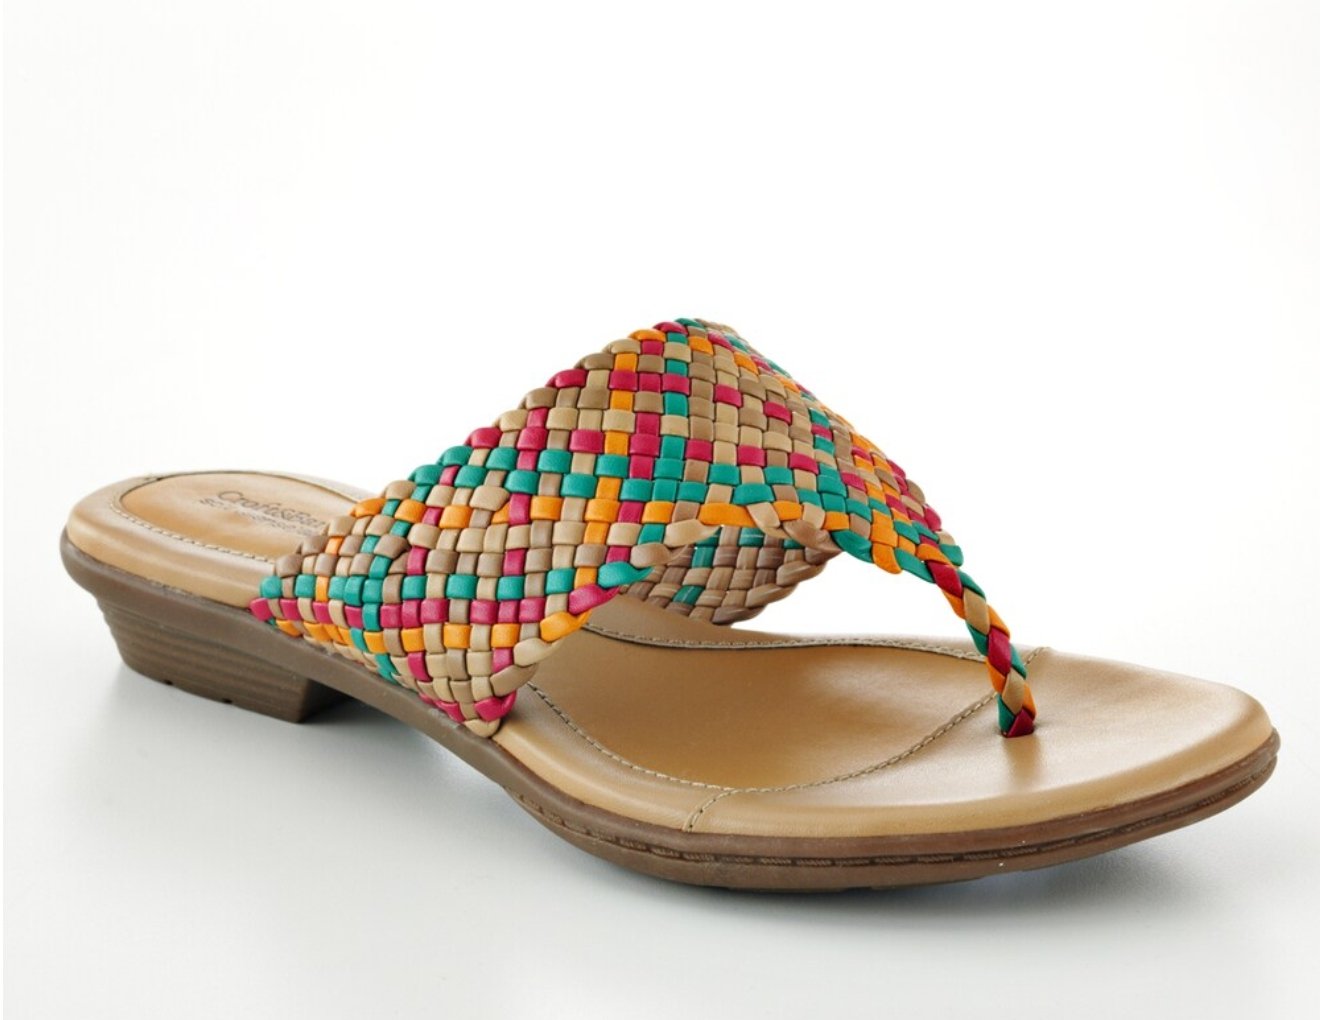 New Croft & Barrow Jeanie Sole Sense Ability Thong Sandals Multi Color Sz 7